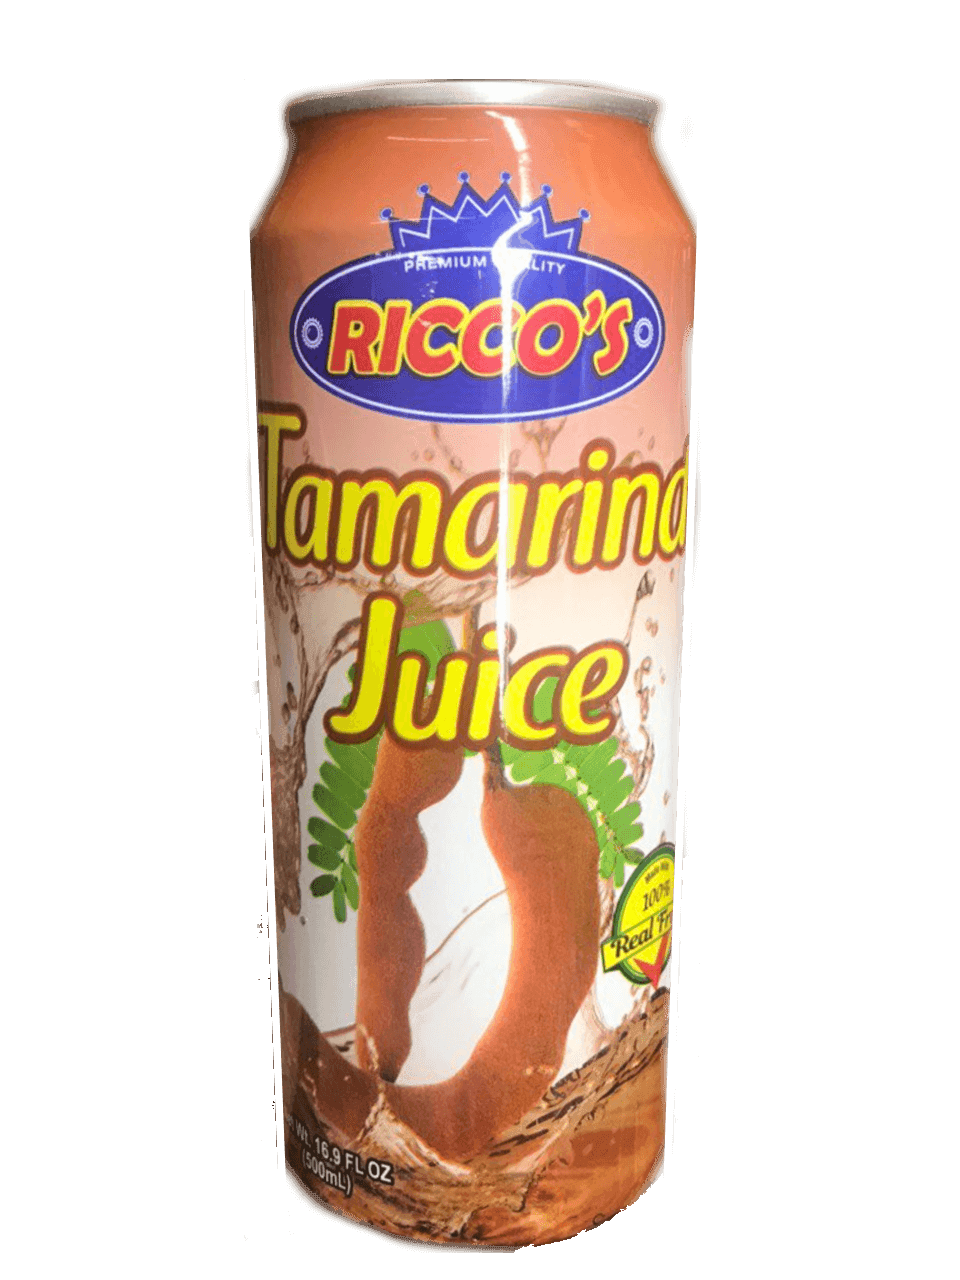 Ricco's - Tamarind Juice 16.5 fl oz